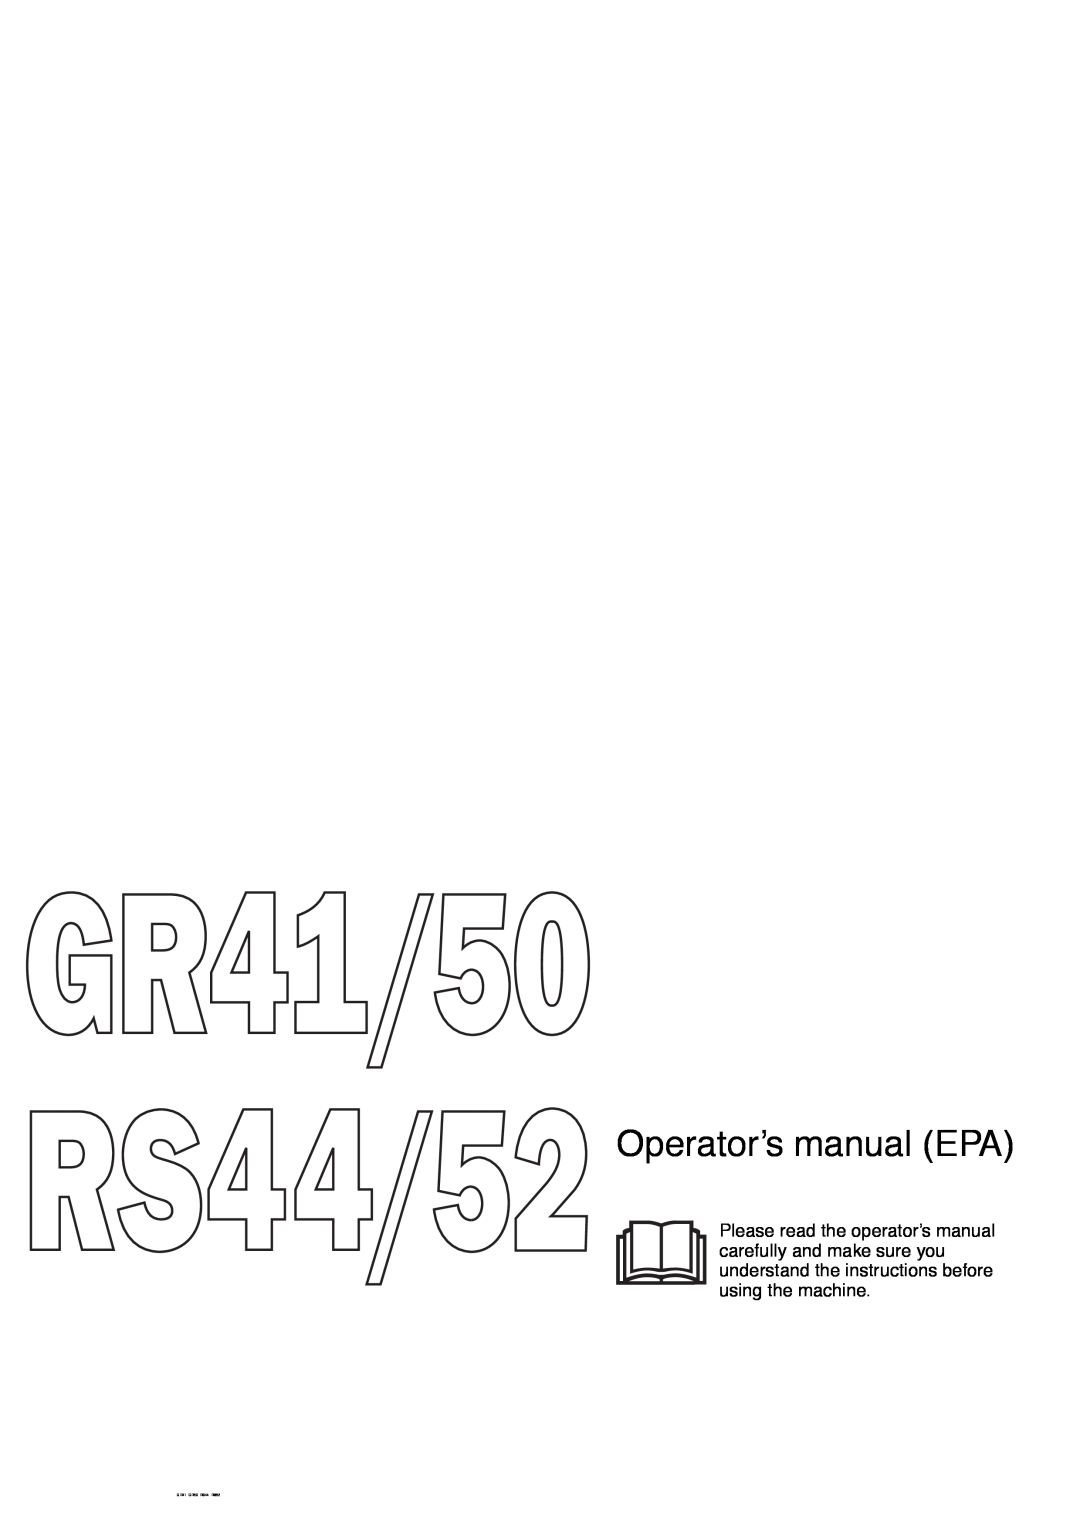 Jonsered manual Operator’s manual EPA, GR41 GR50 RS44 RS52 